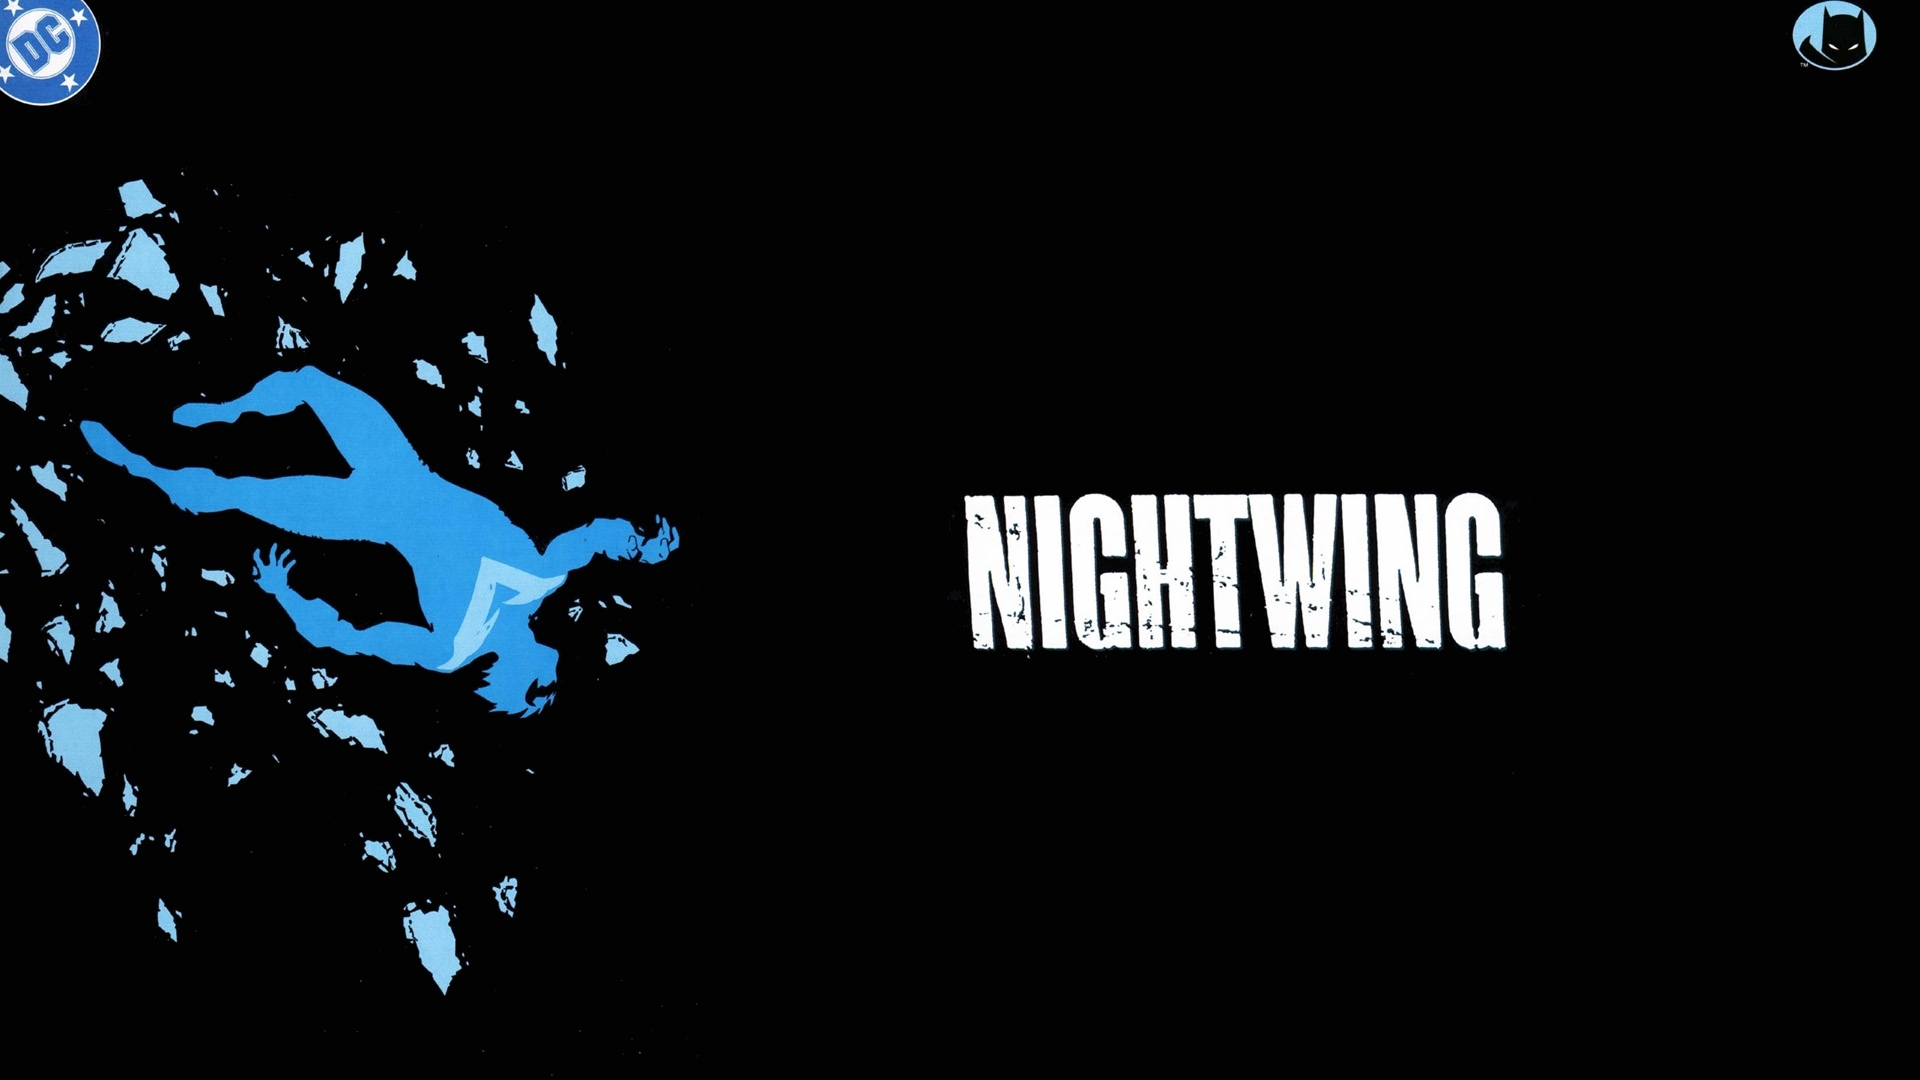 Nightwing Computer Wallpapers Desktop Backgrounds